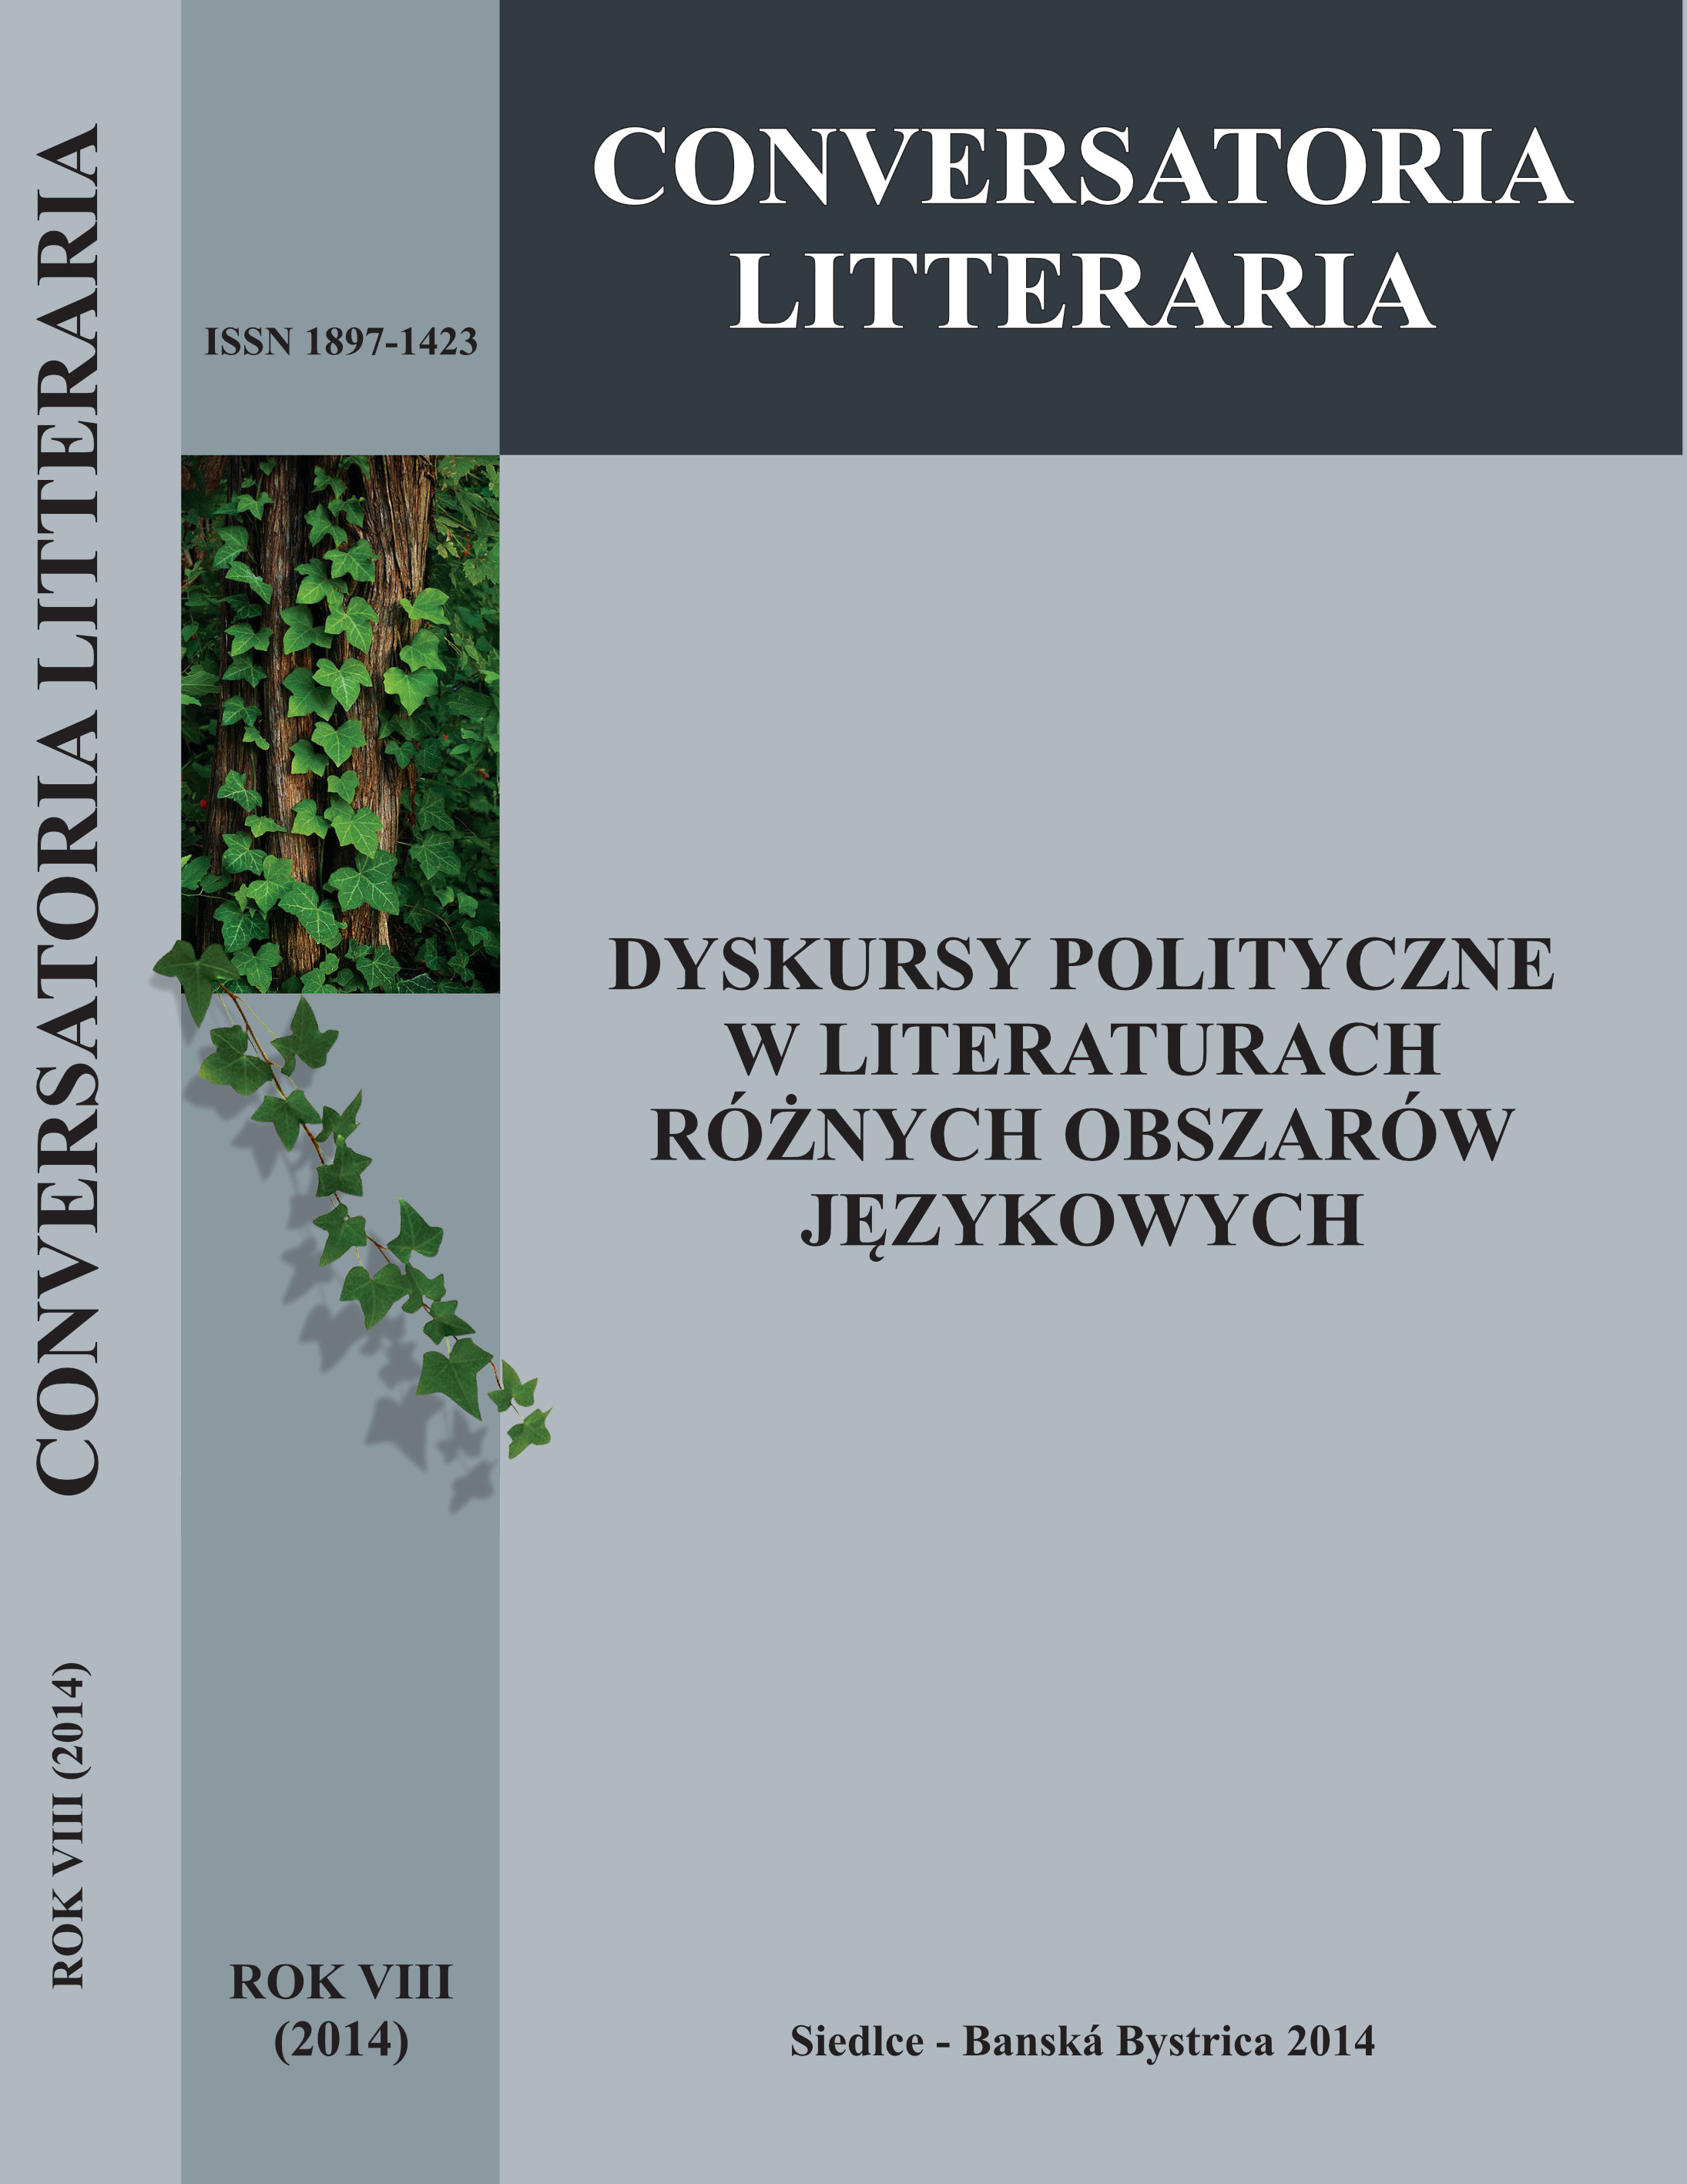 Okładka czasopisma Conversatoria Litteraria 2014 (tom 8)